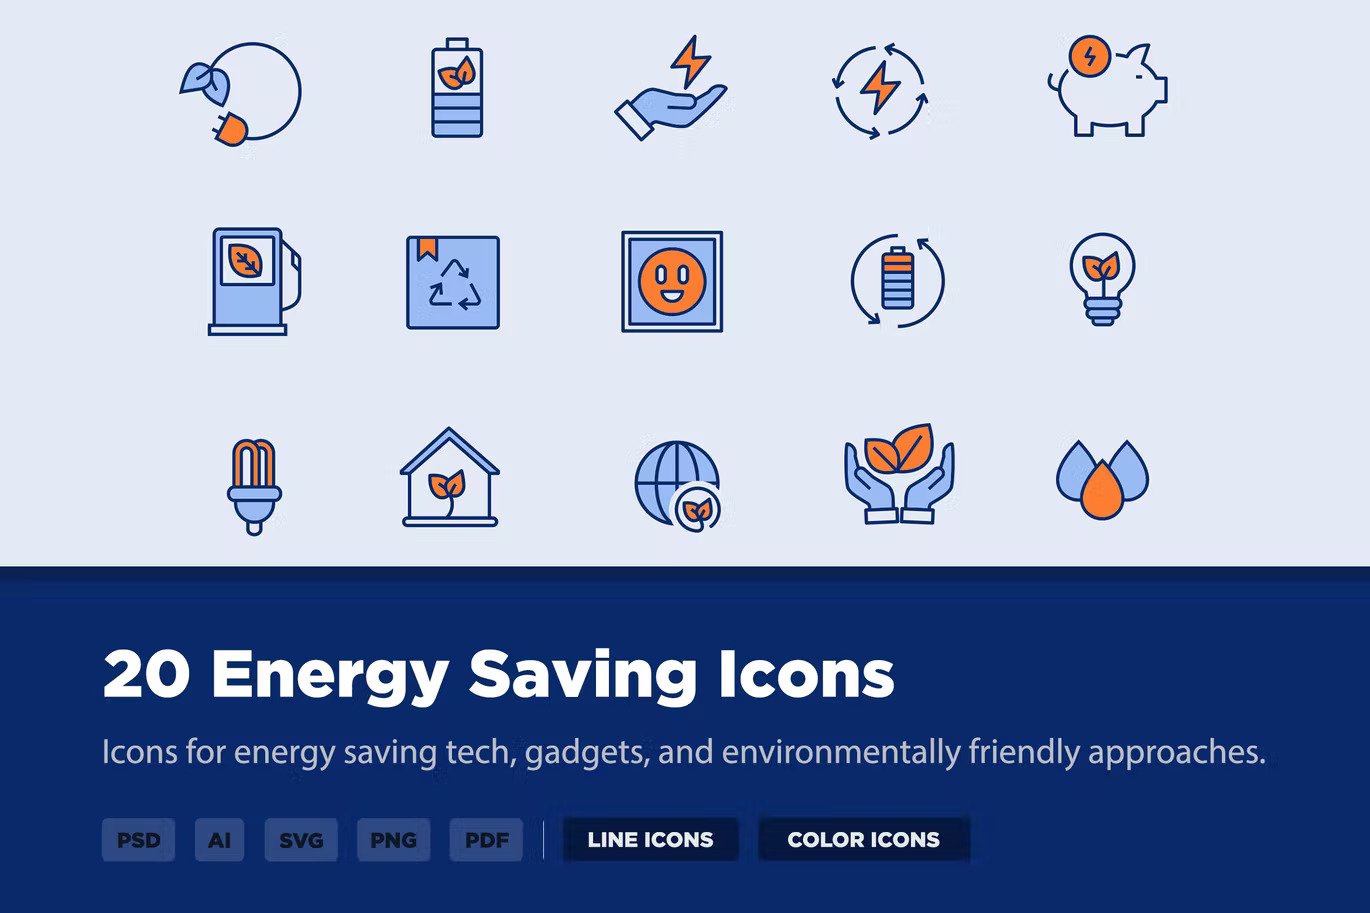 Twenty energy saving icons